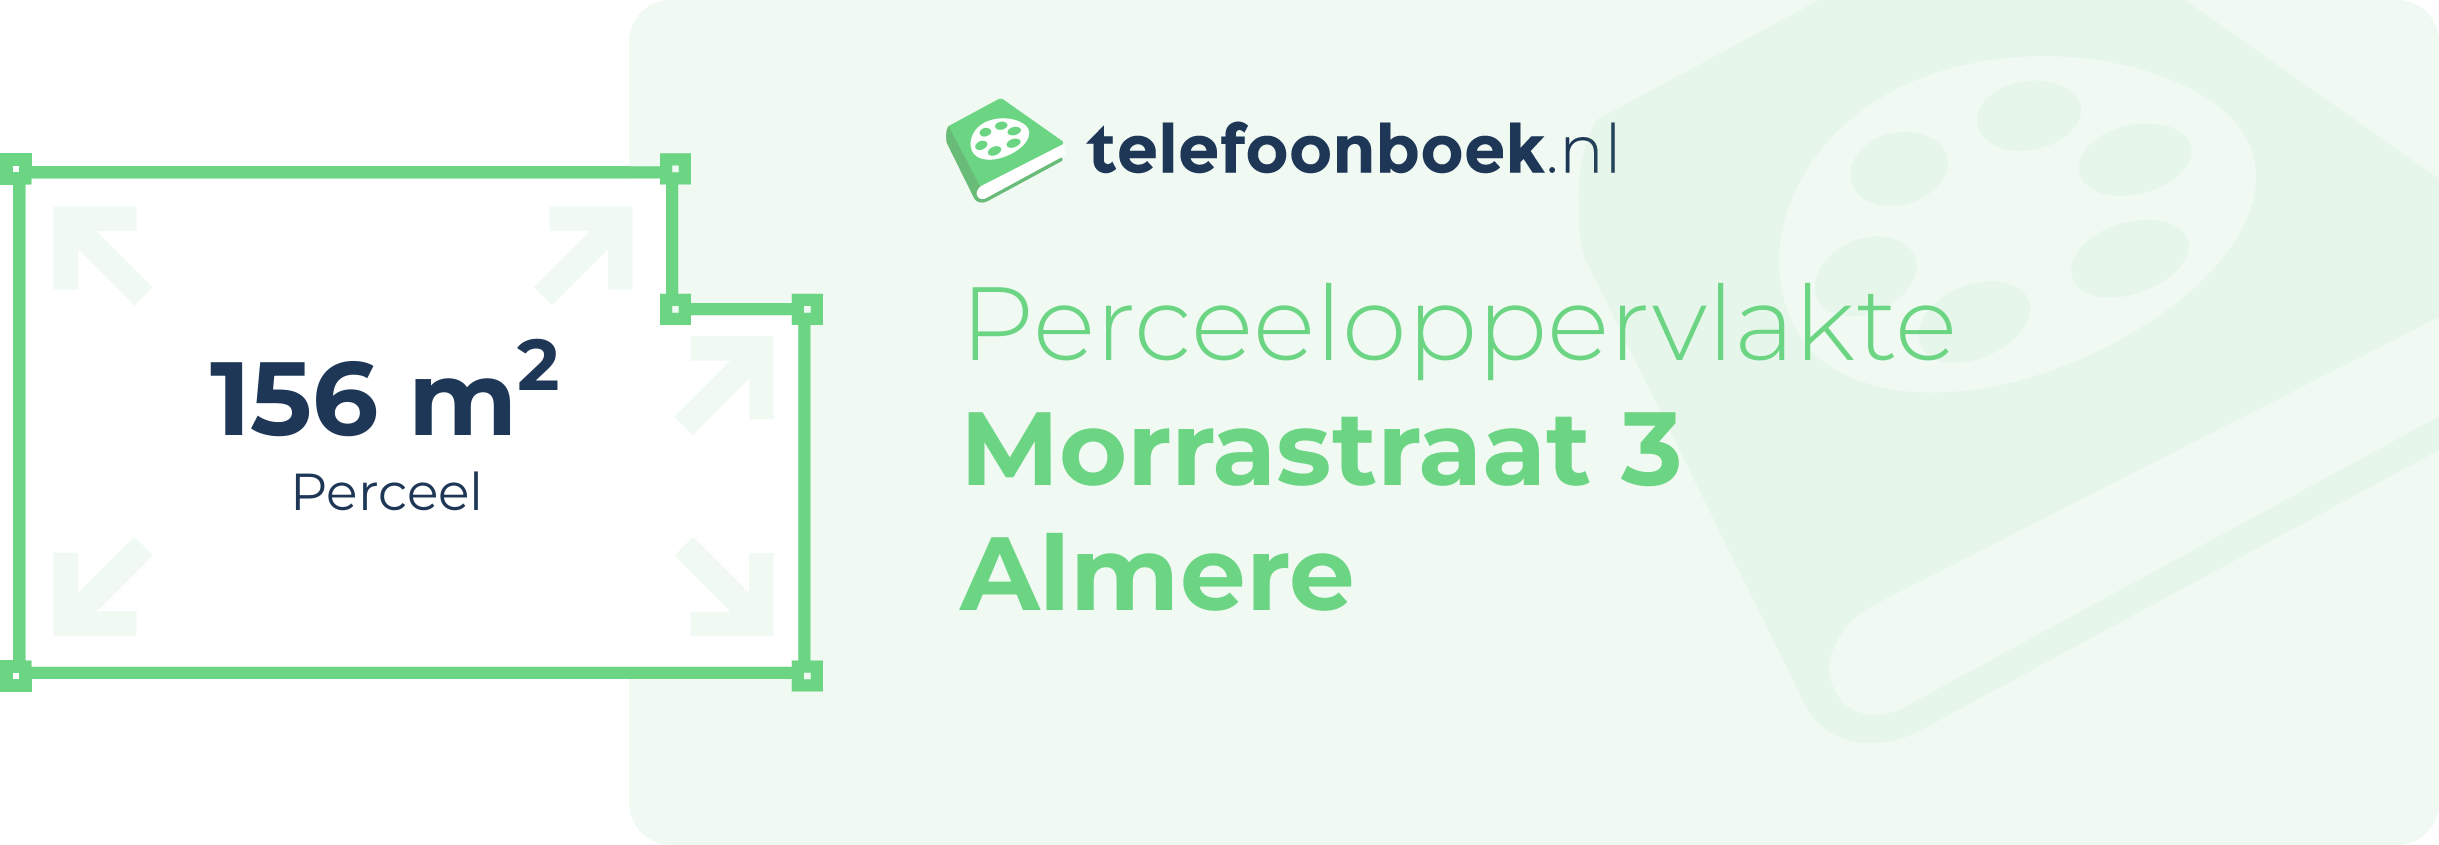 Perceeloppervlakte Morrastraat 3 Almere